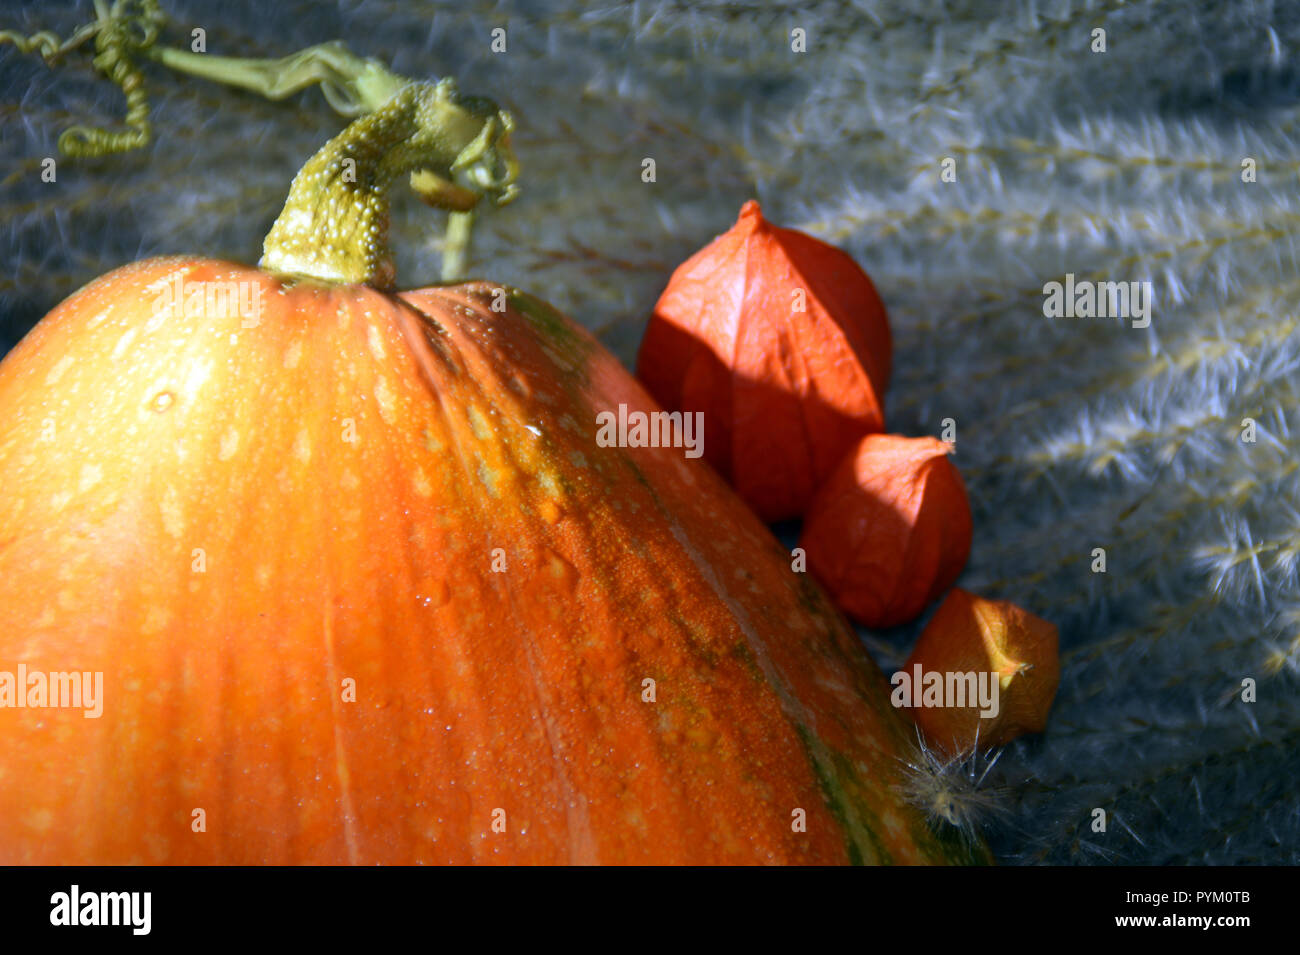 Autumn harvest - physalis flowers and orange pumpkin. Stock Photo